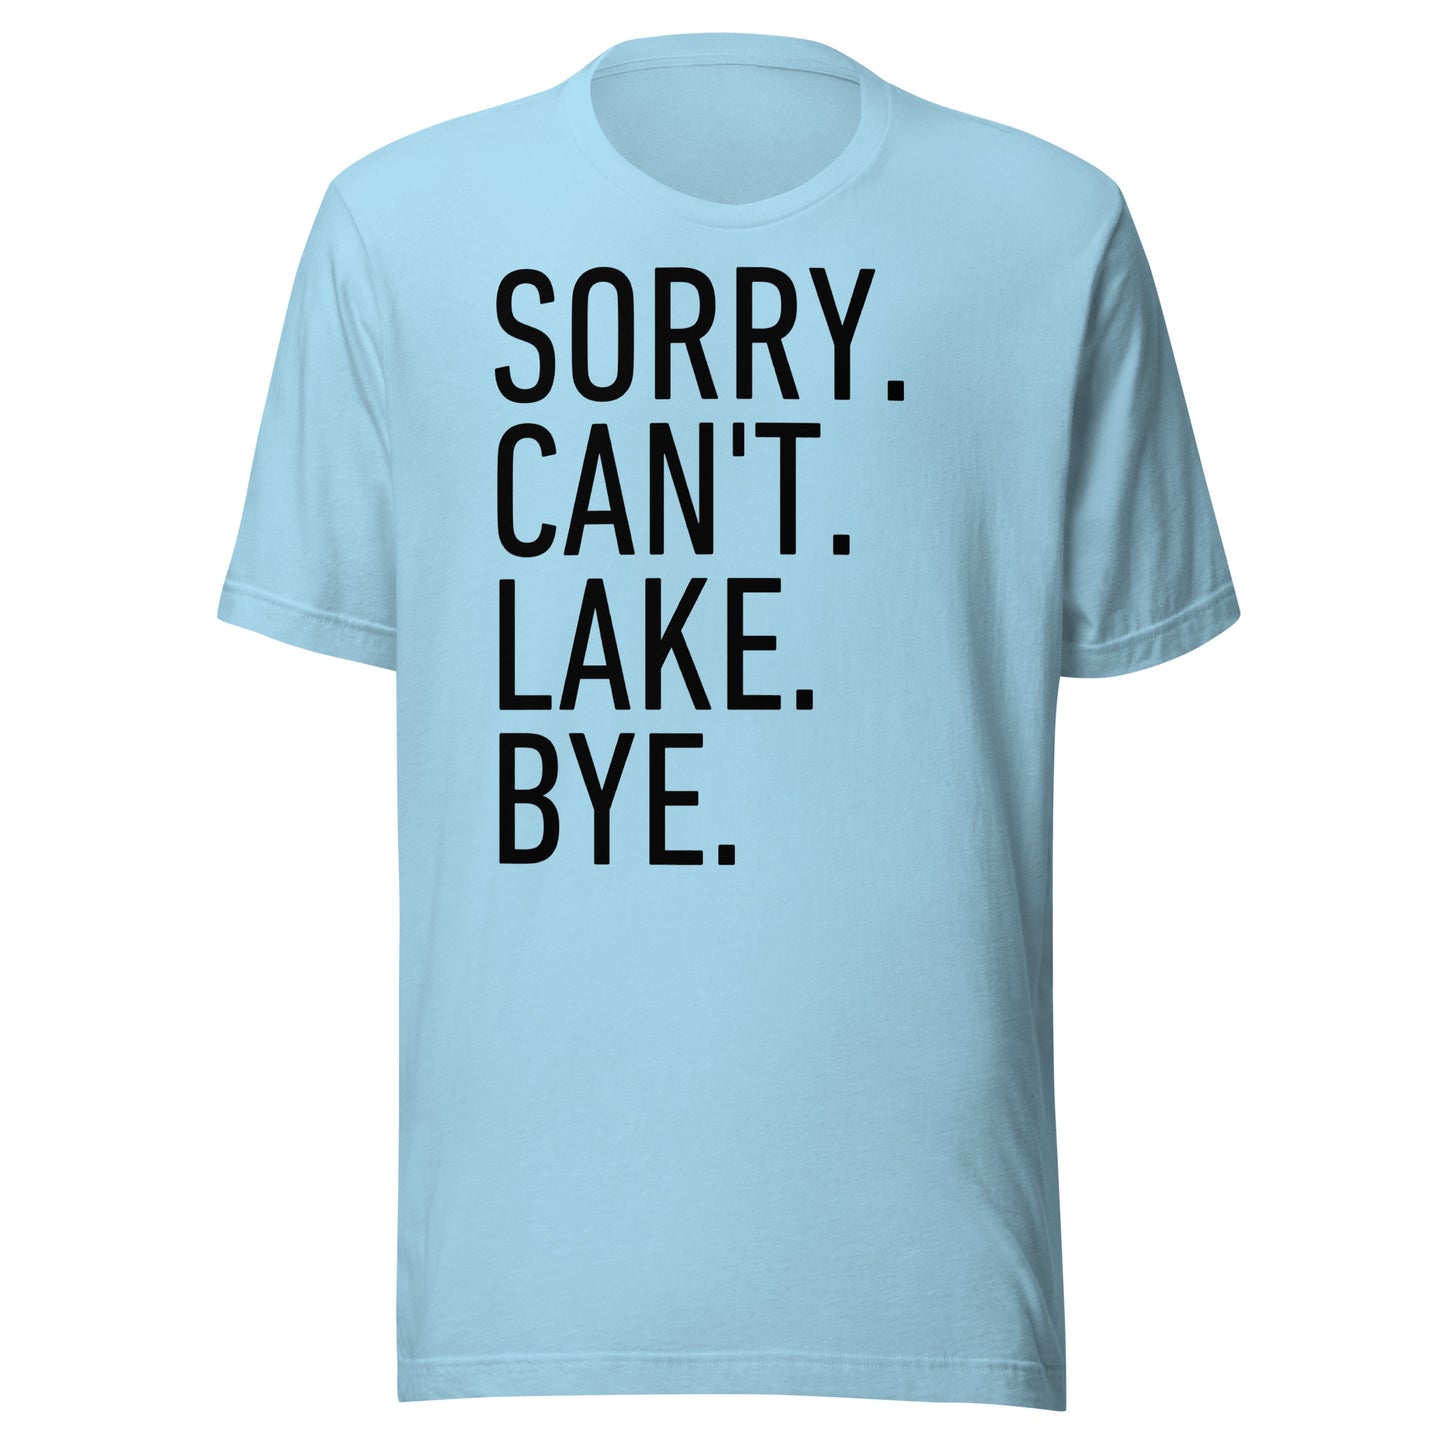 Sorry. Can't. Lake. Bye. T-Shirt